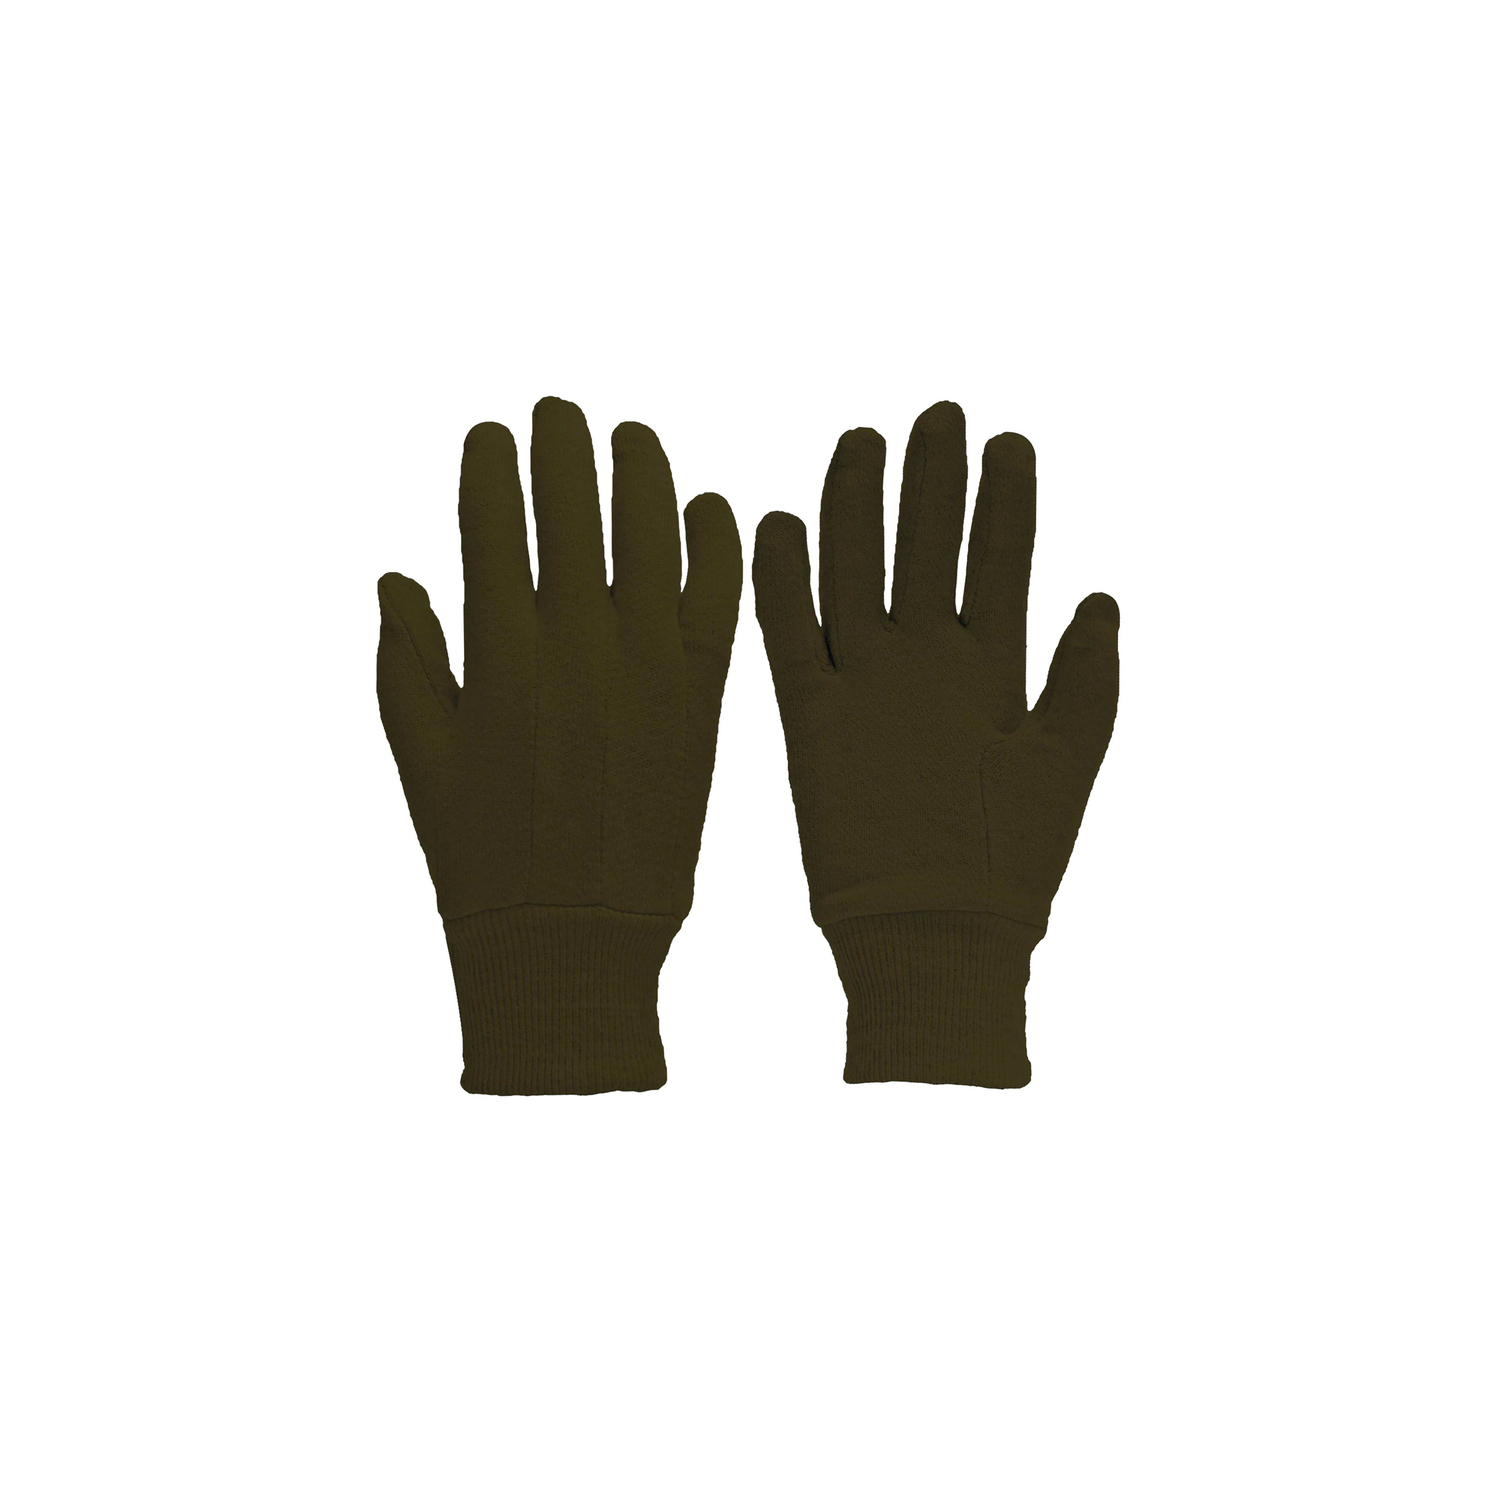 True Grip 9116-26 Cotton Jersey Gloves, Medium - image 1 of 2